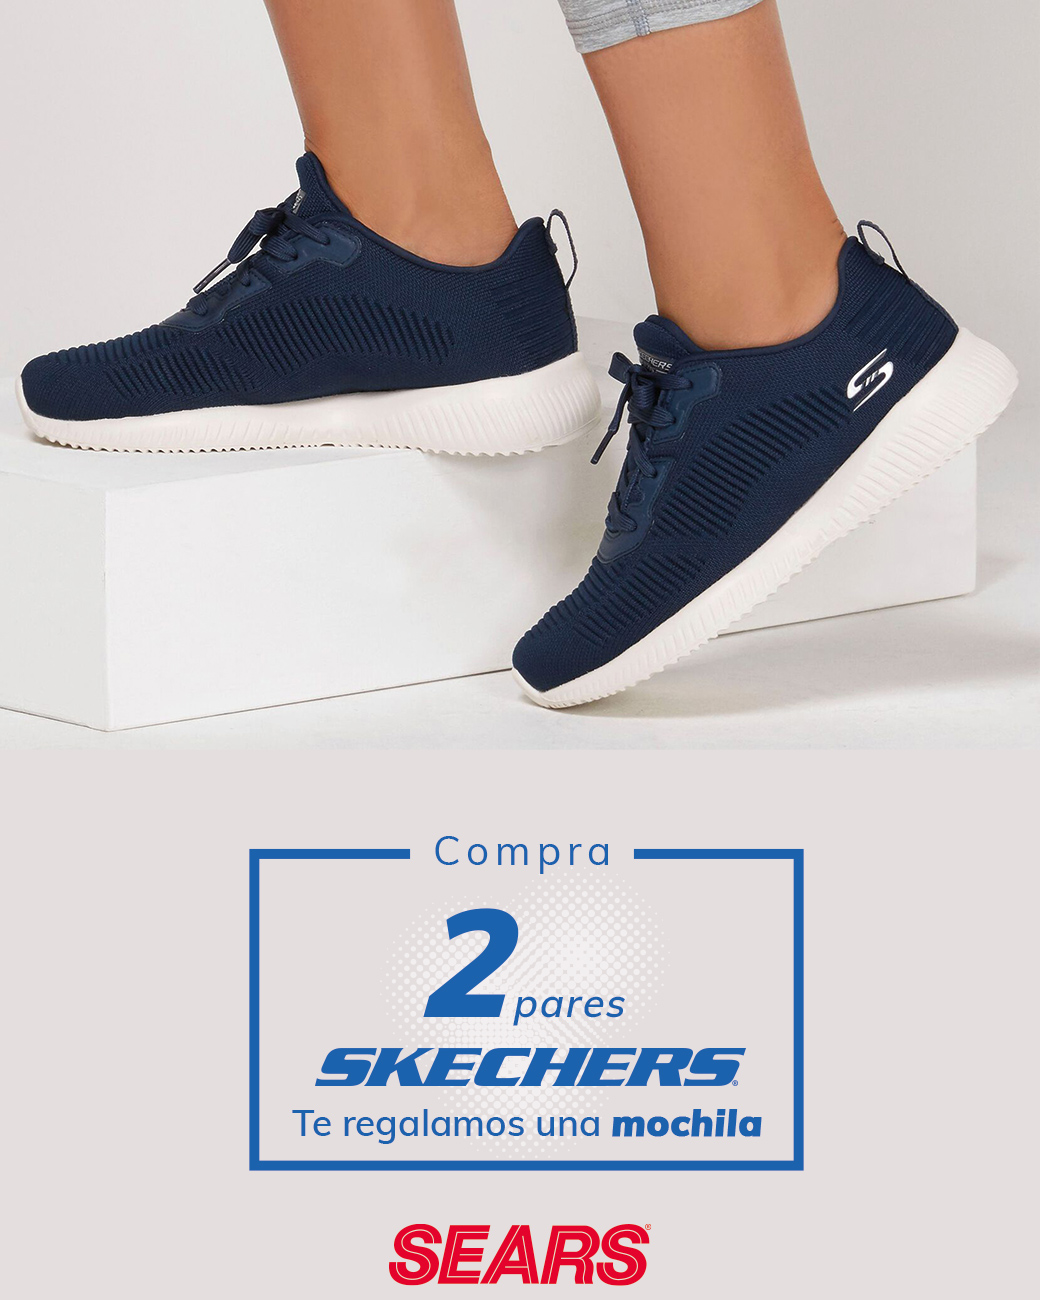 dueño germen de acuerdo a Cazaofertas on Twitter: "En Sears compra 2 pares de tenis Skechers y  llévate una mochila de regalo https://t.co/1QPs9fqJua #Oferta #promocion # México #ofertas #promociones #descuentos #Cazaofertas  https://t.co/Tq7iRKUnL7" / Twitter